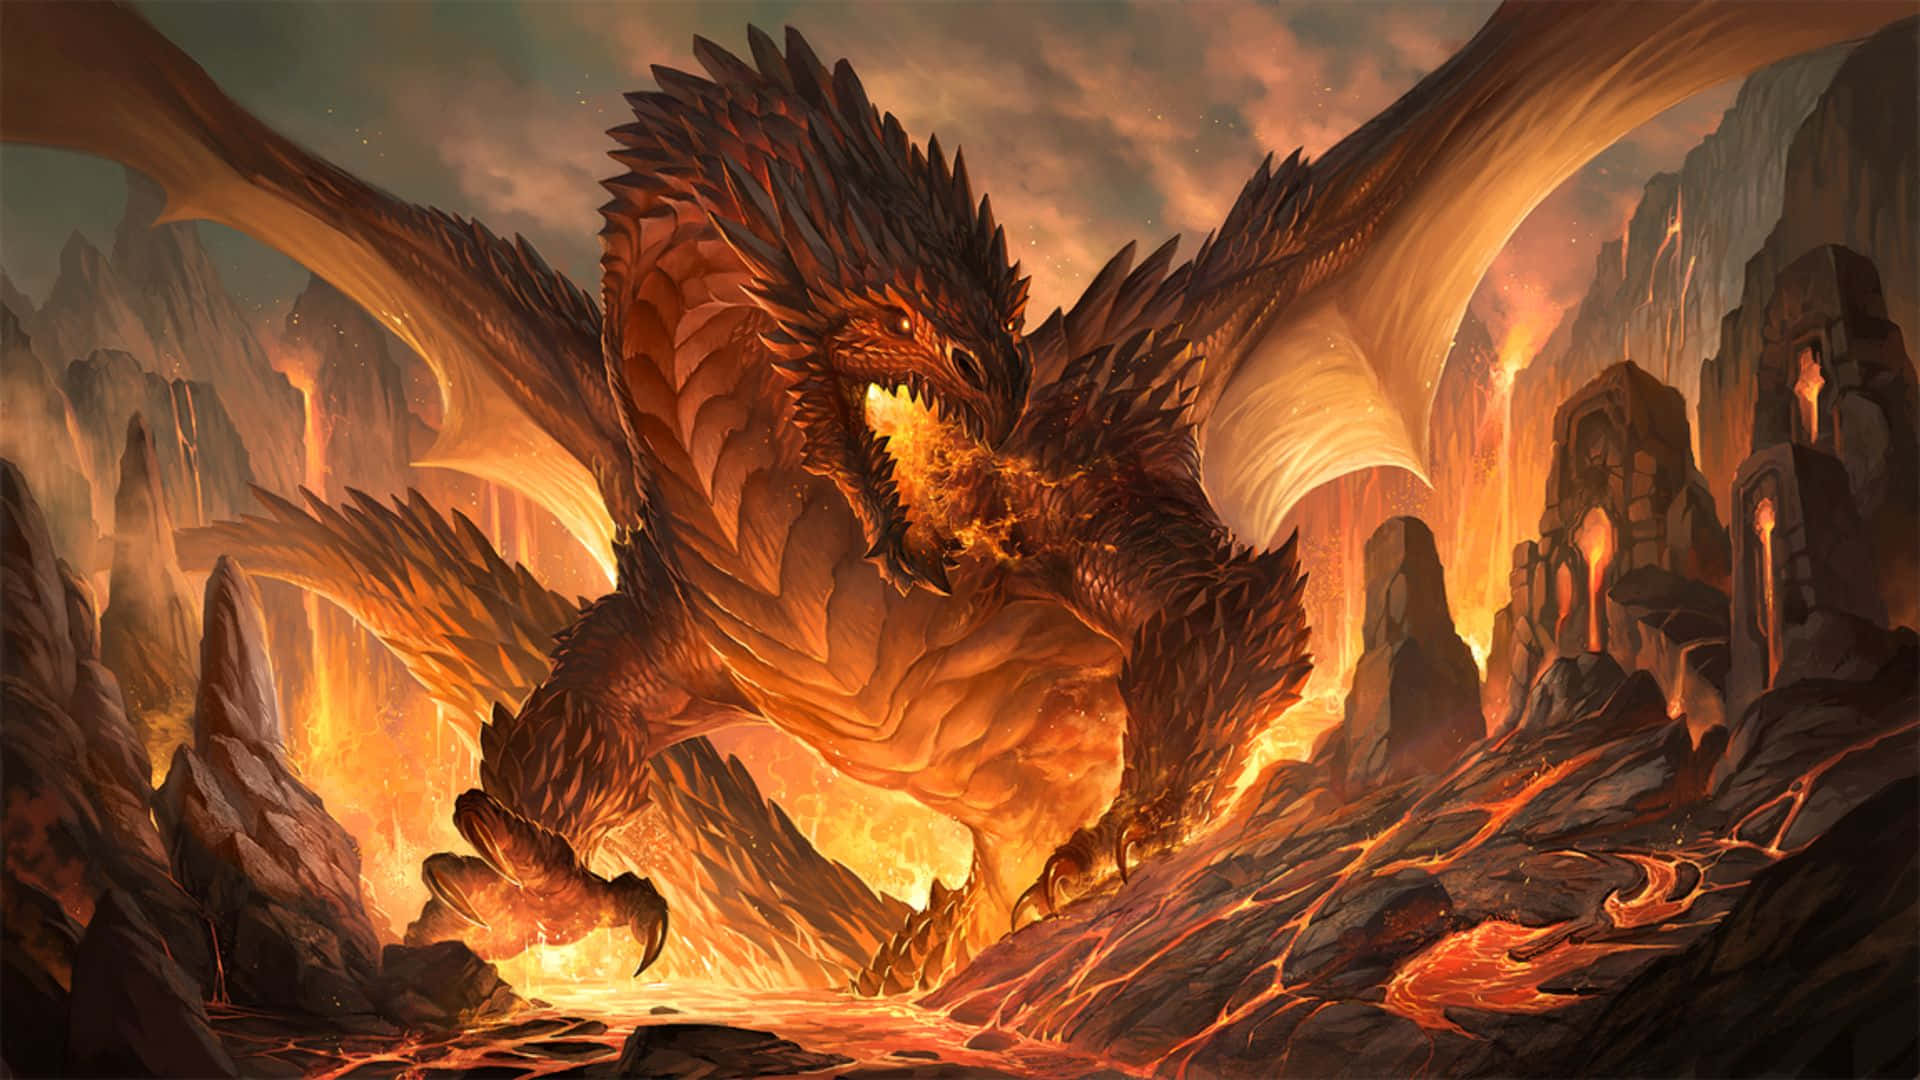 1080p Dragon Fantasy Raging Inferno Wallpaper